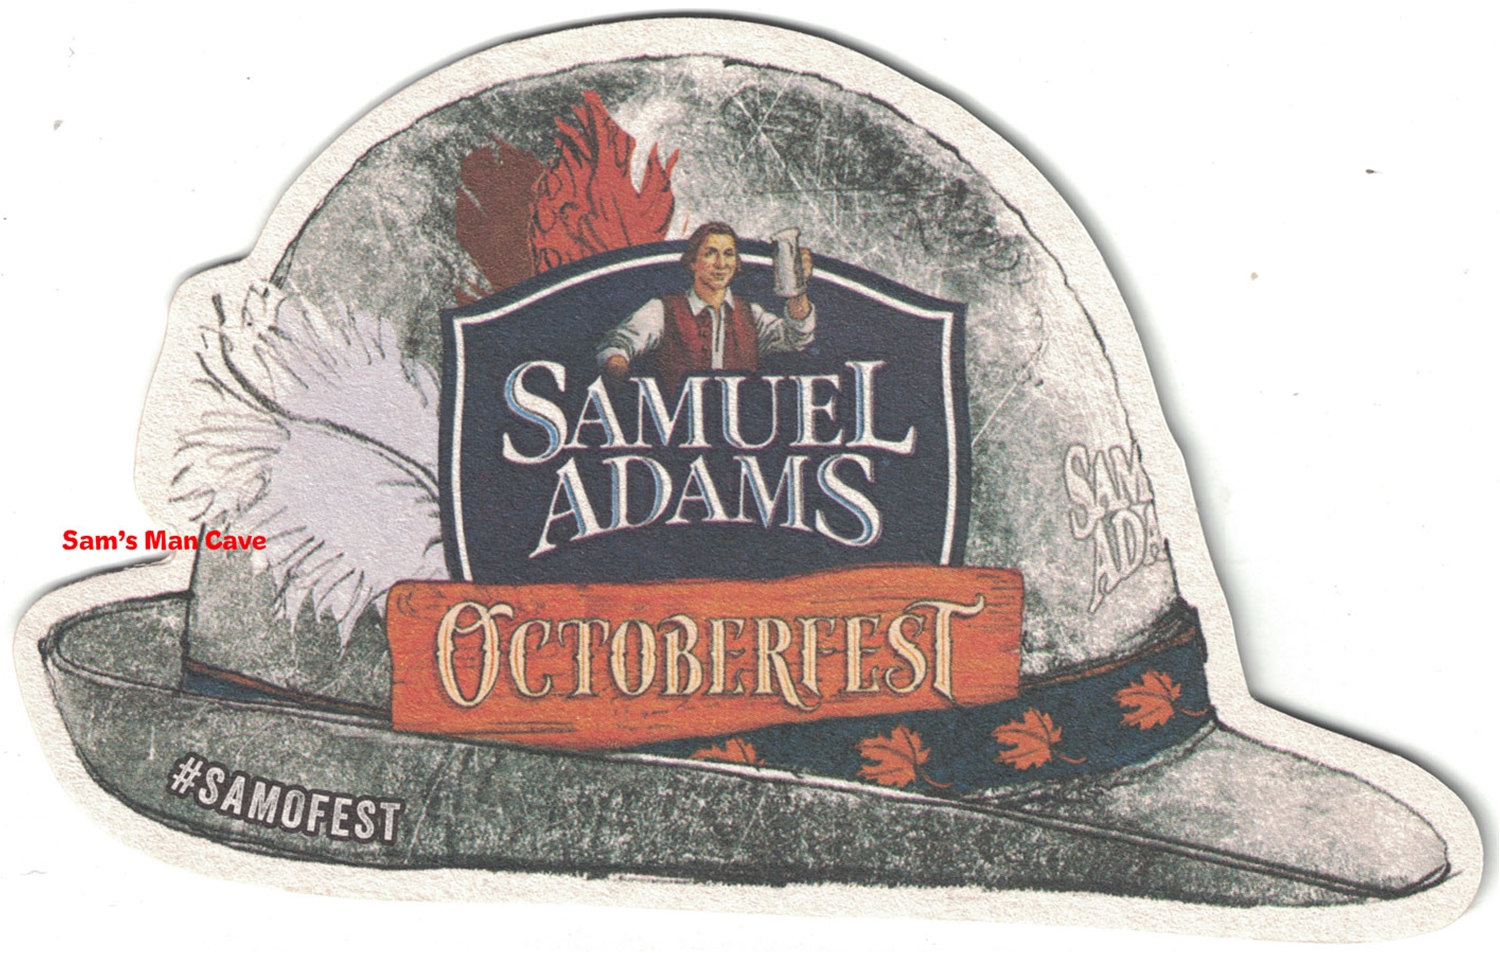 Samuel Adams Oktoberfest Beer Coaster